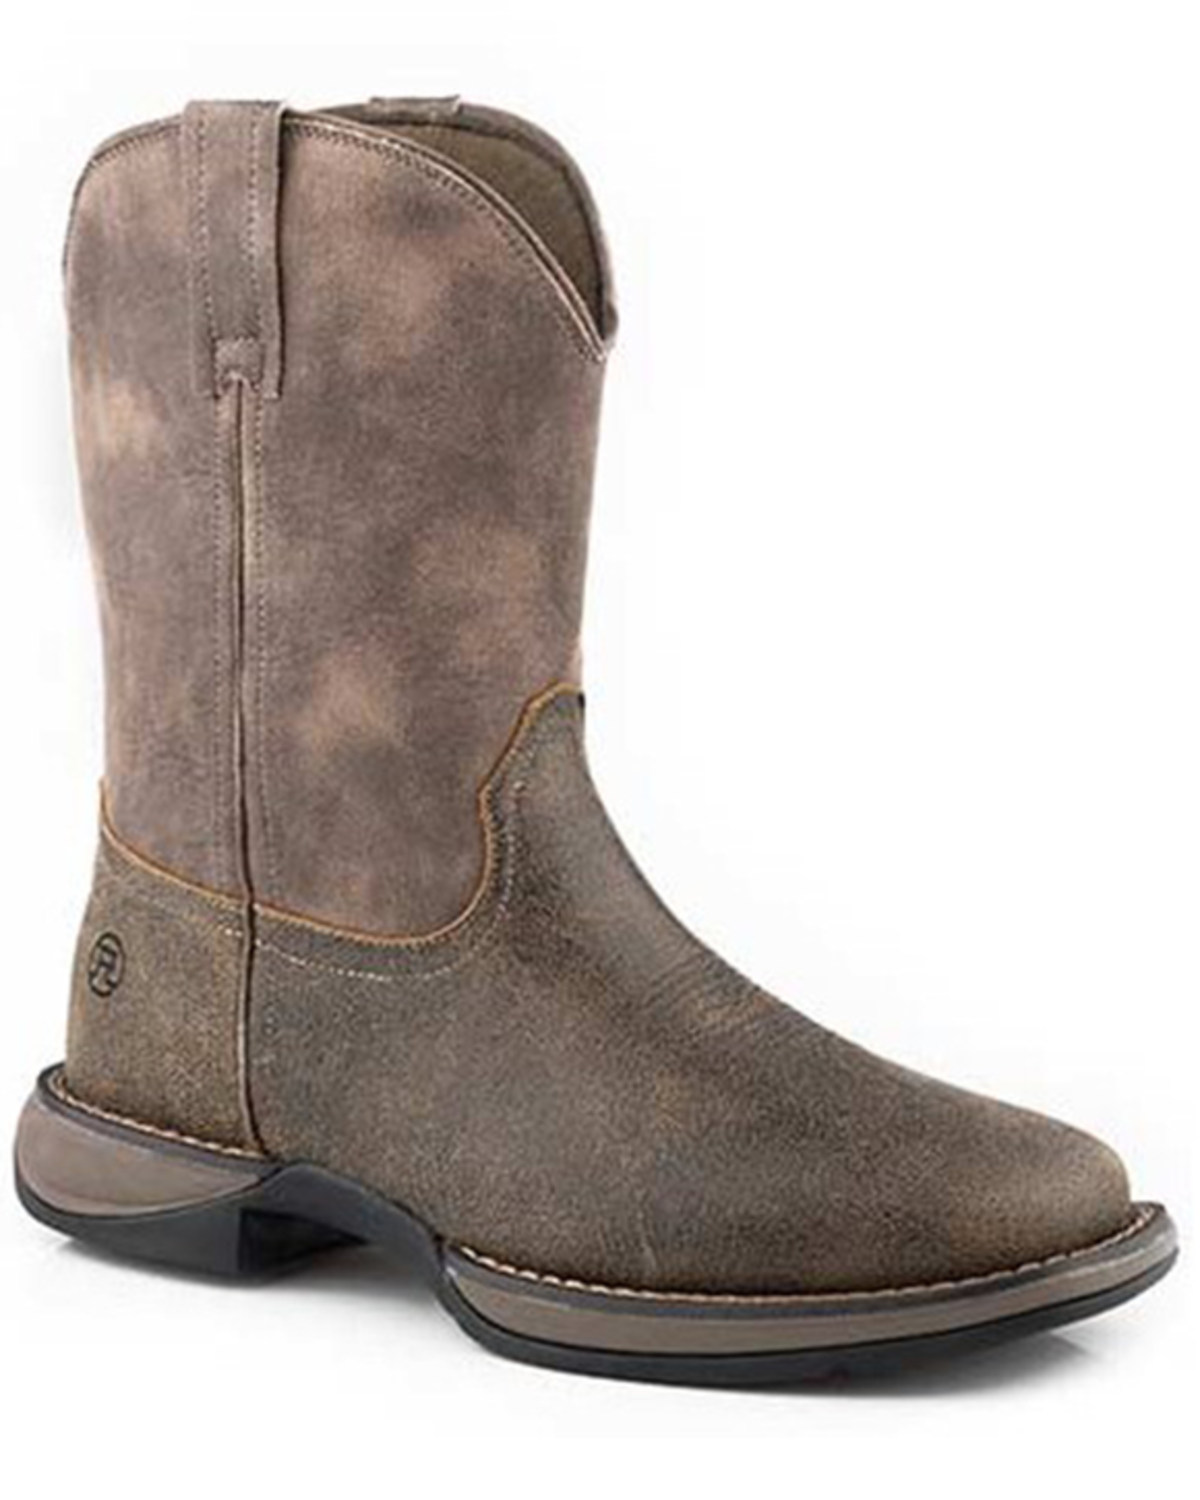 Roper Men's Wilder II Western Boots - Broad Square Toe